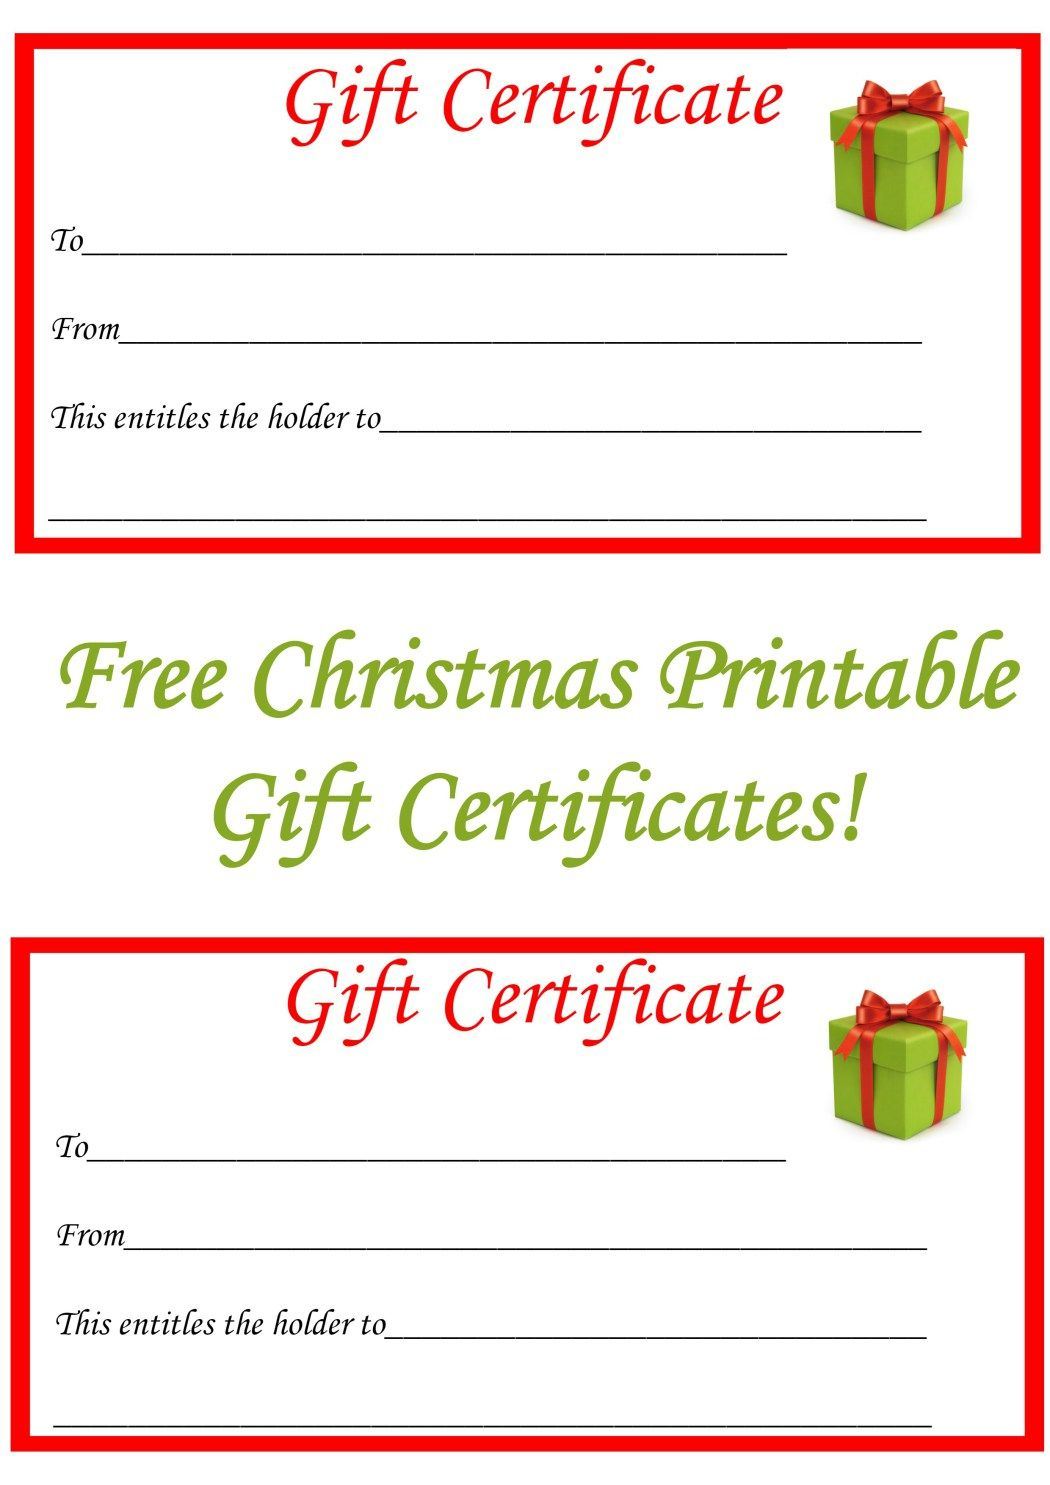 Free Christmas Printable Gift Certificates | Gift Ideas | Pinterest - Free Printable Gift Certificates